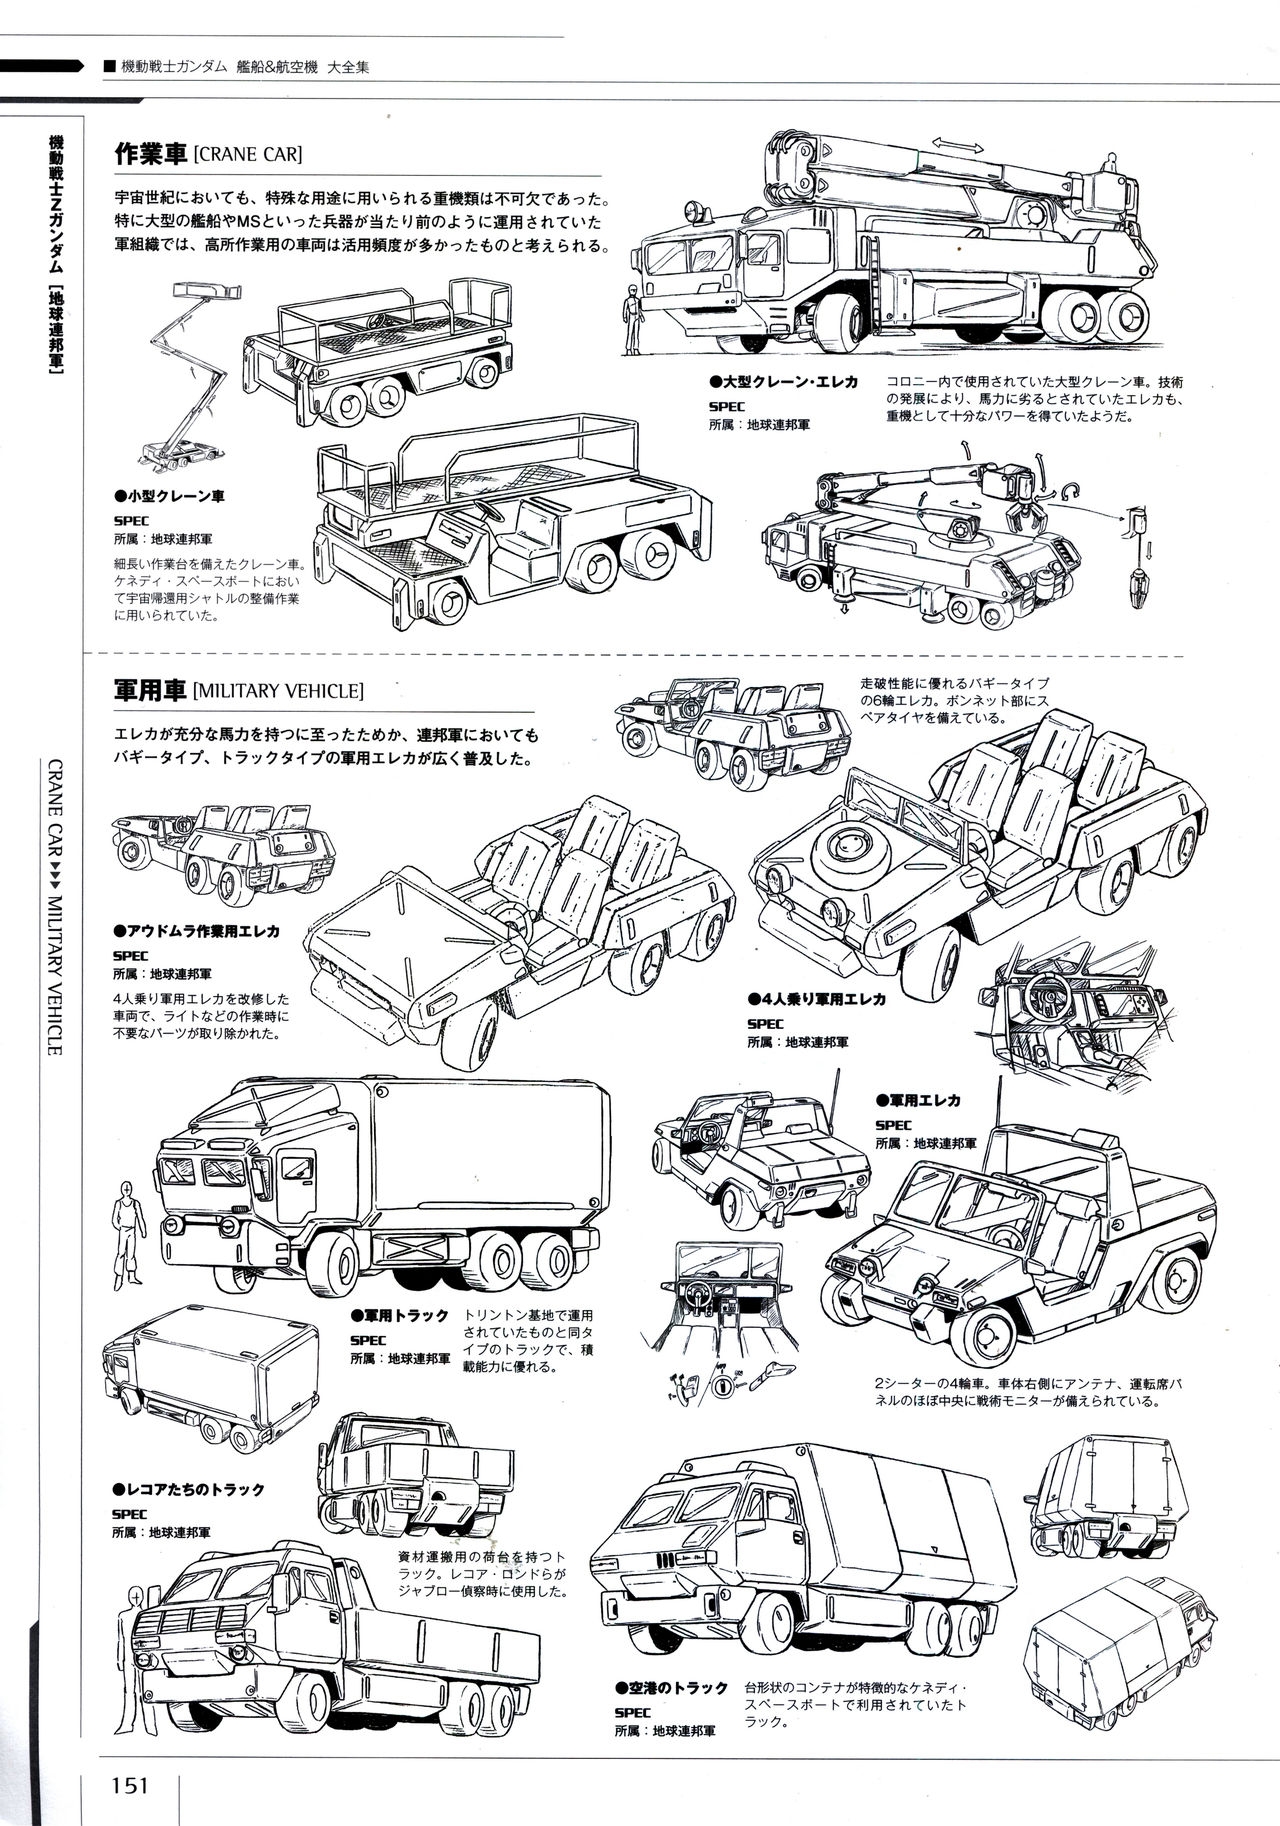 Mobile Suit Gundam - Ship & Aerospace Plane Encyclopedia - Revised Edition 156